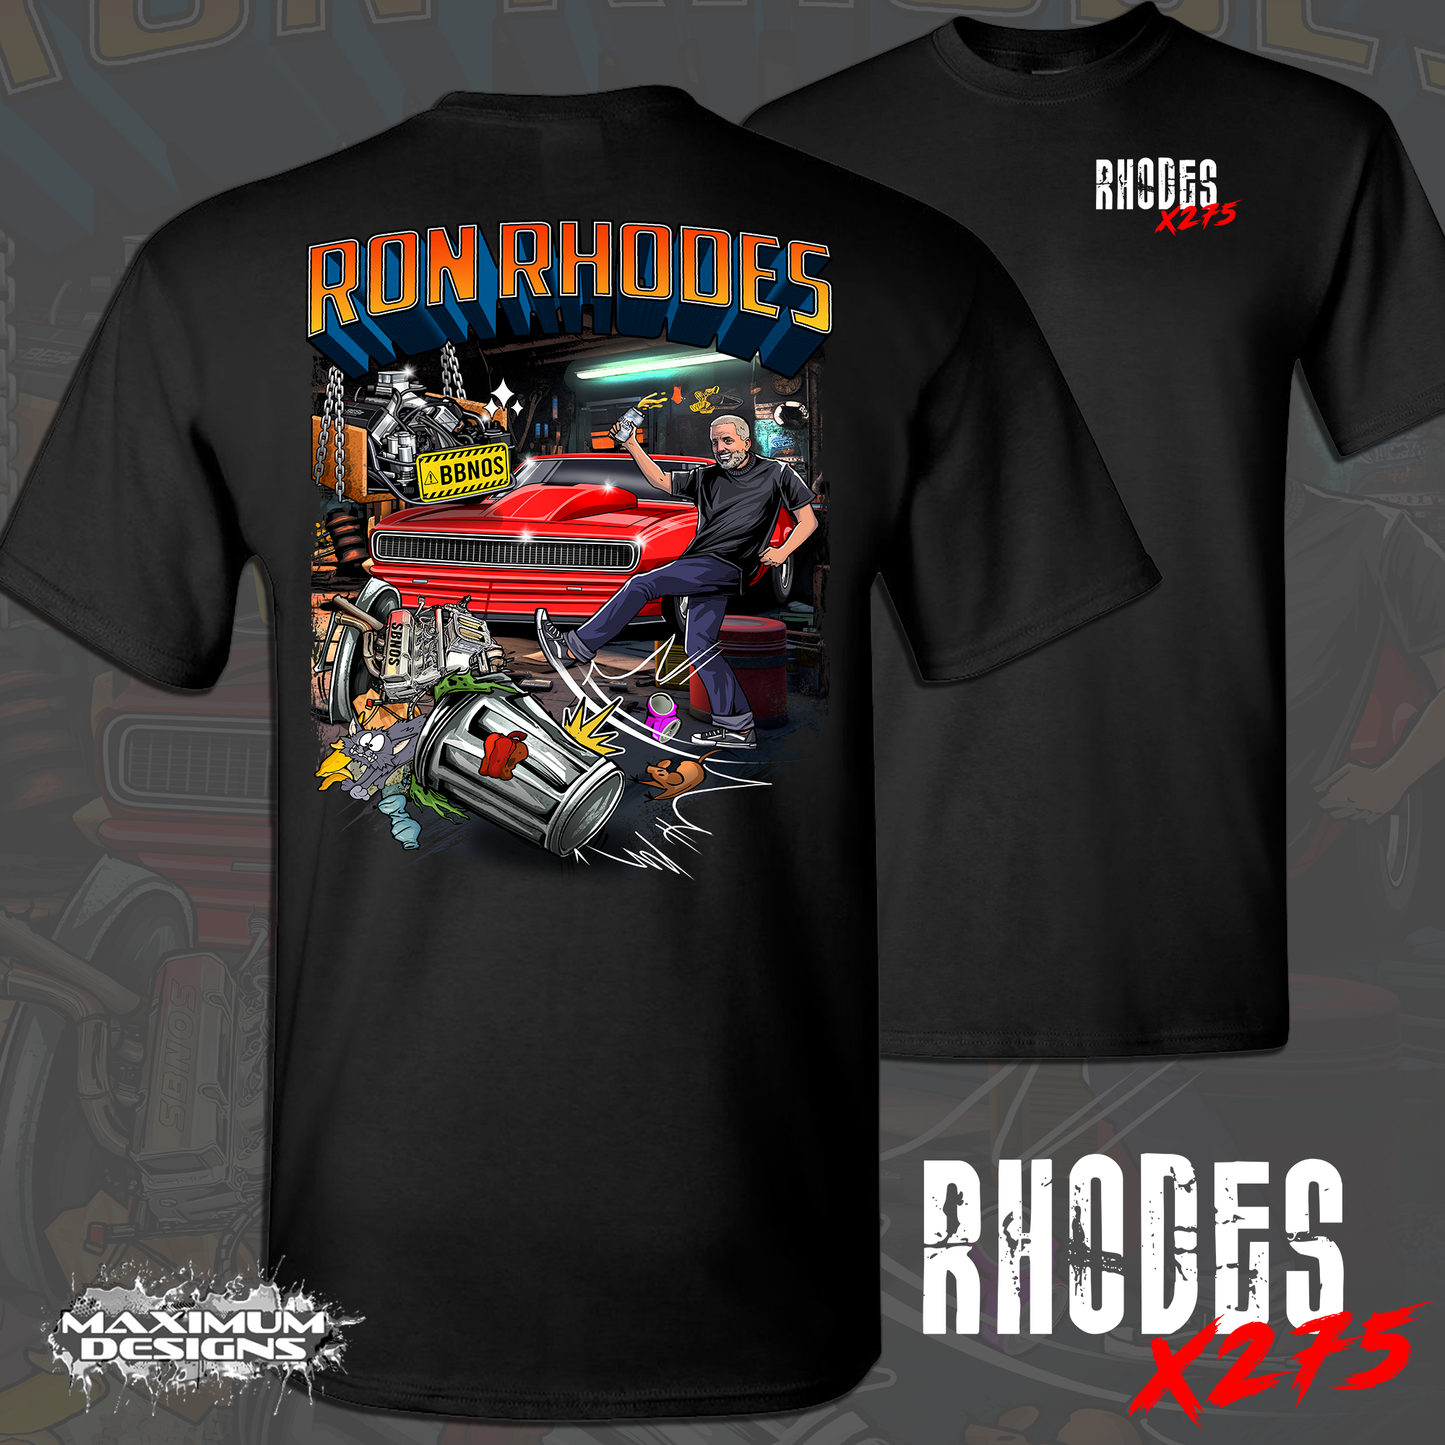 Rhodes X275 Shirts